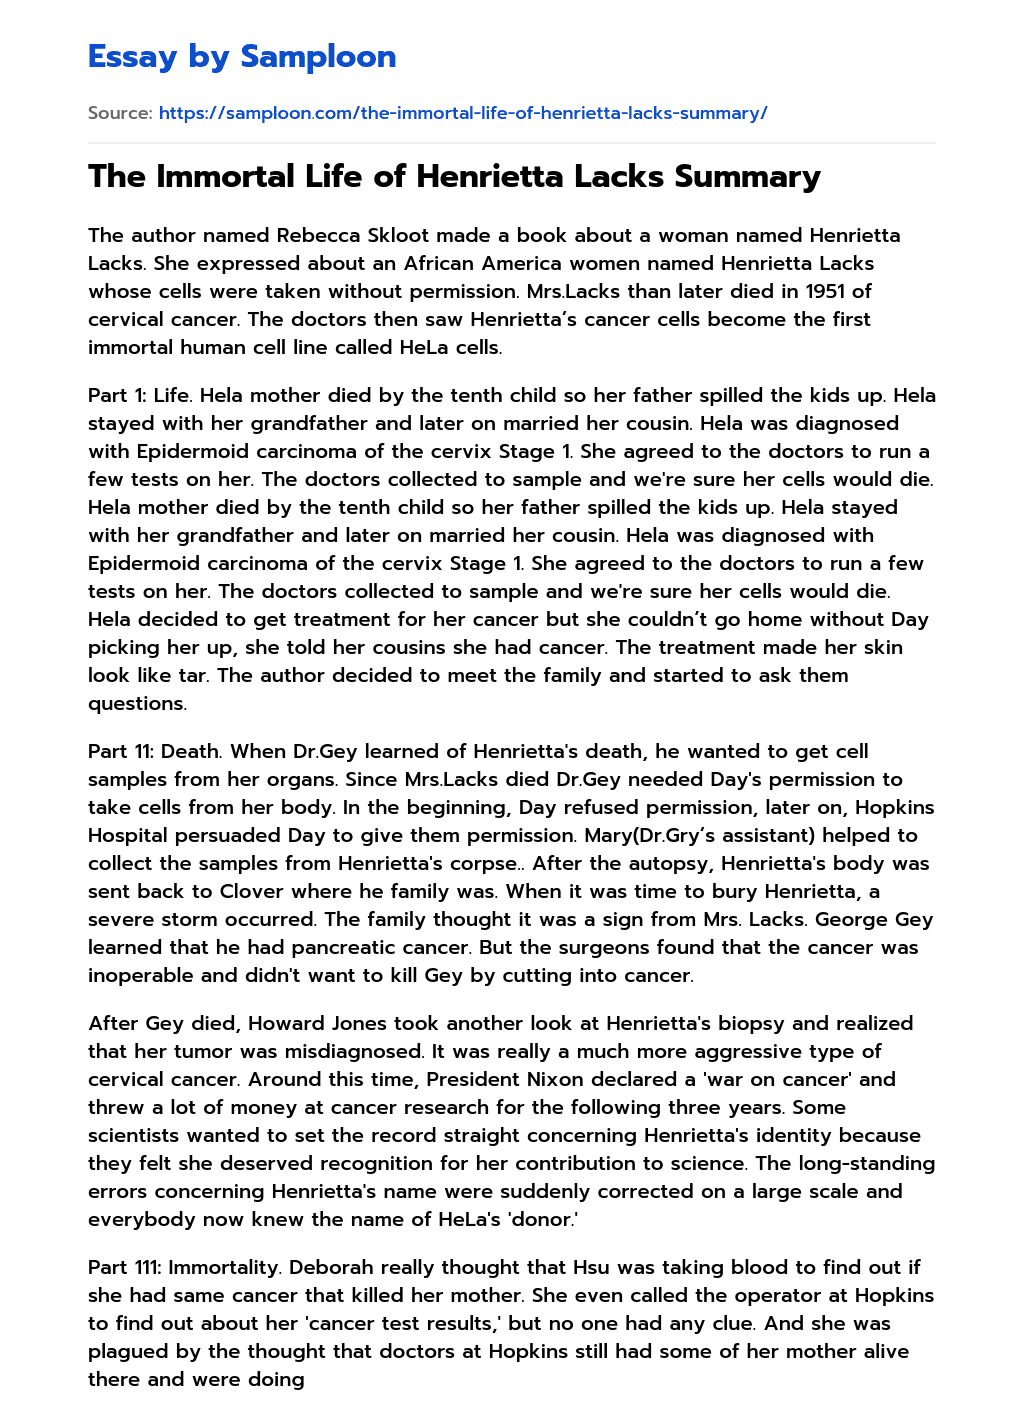 The Immortal Life of Henrietta Lacks Summary Summary essay